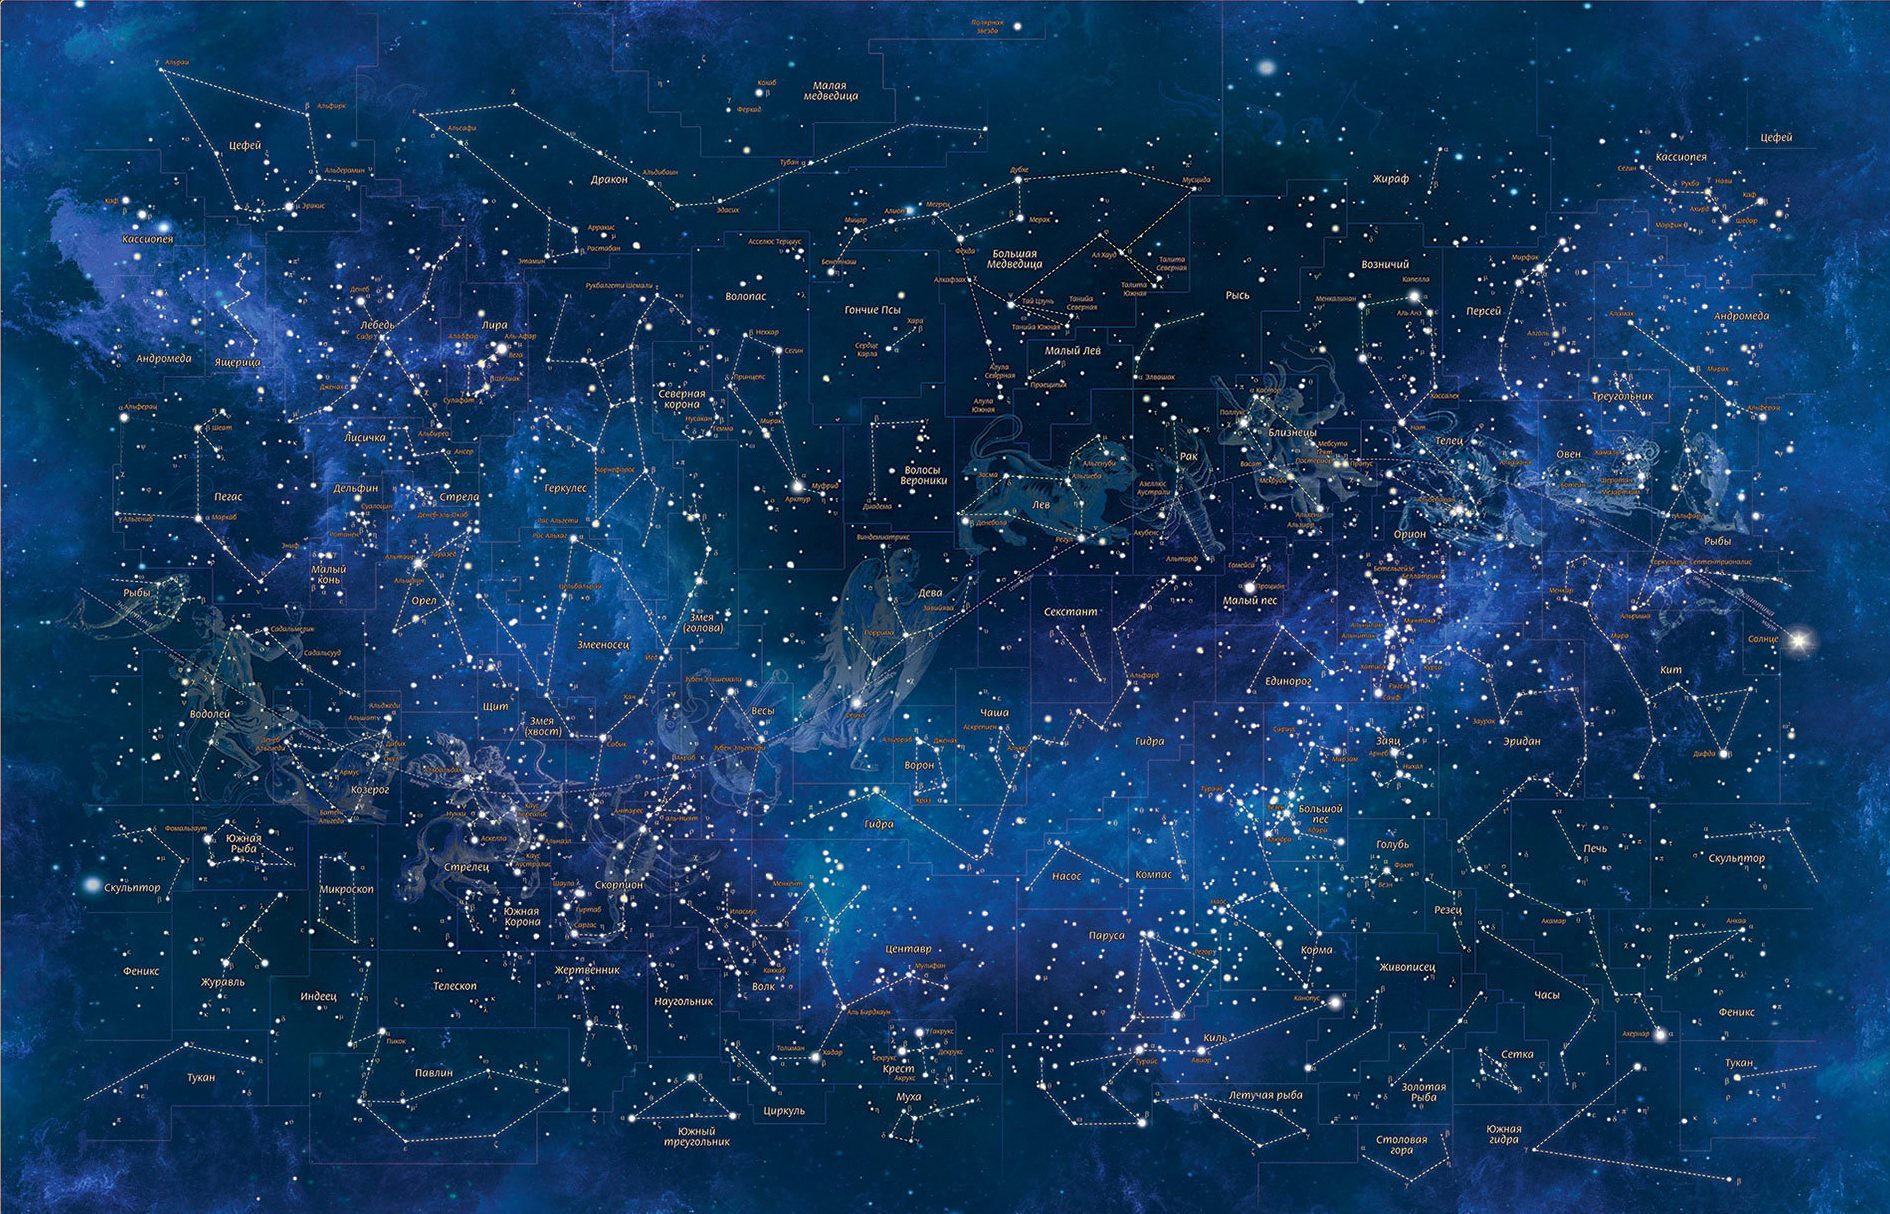 Карта звезд созвездия. Карта звездного неба. Астрономия созвездия карта звездного неба. Звёздная карта неба. Звездноемнебл созвездия.